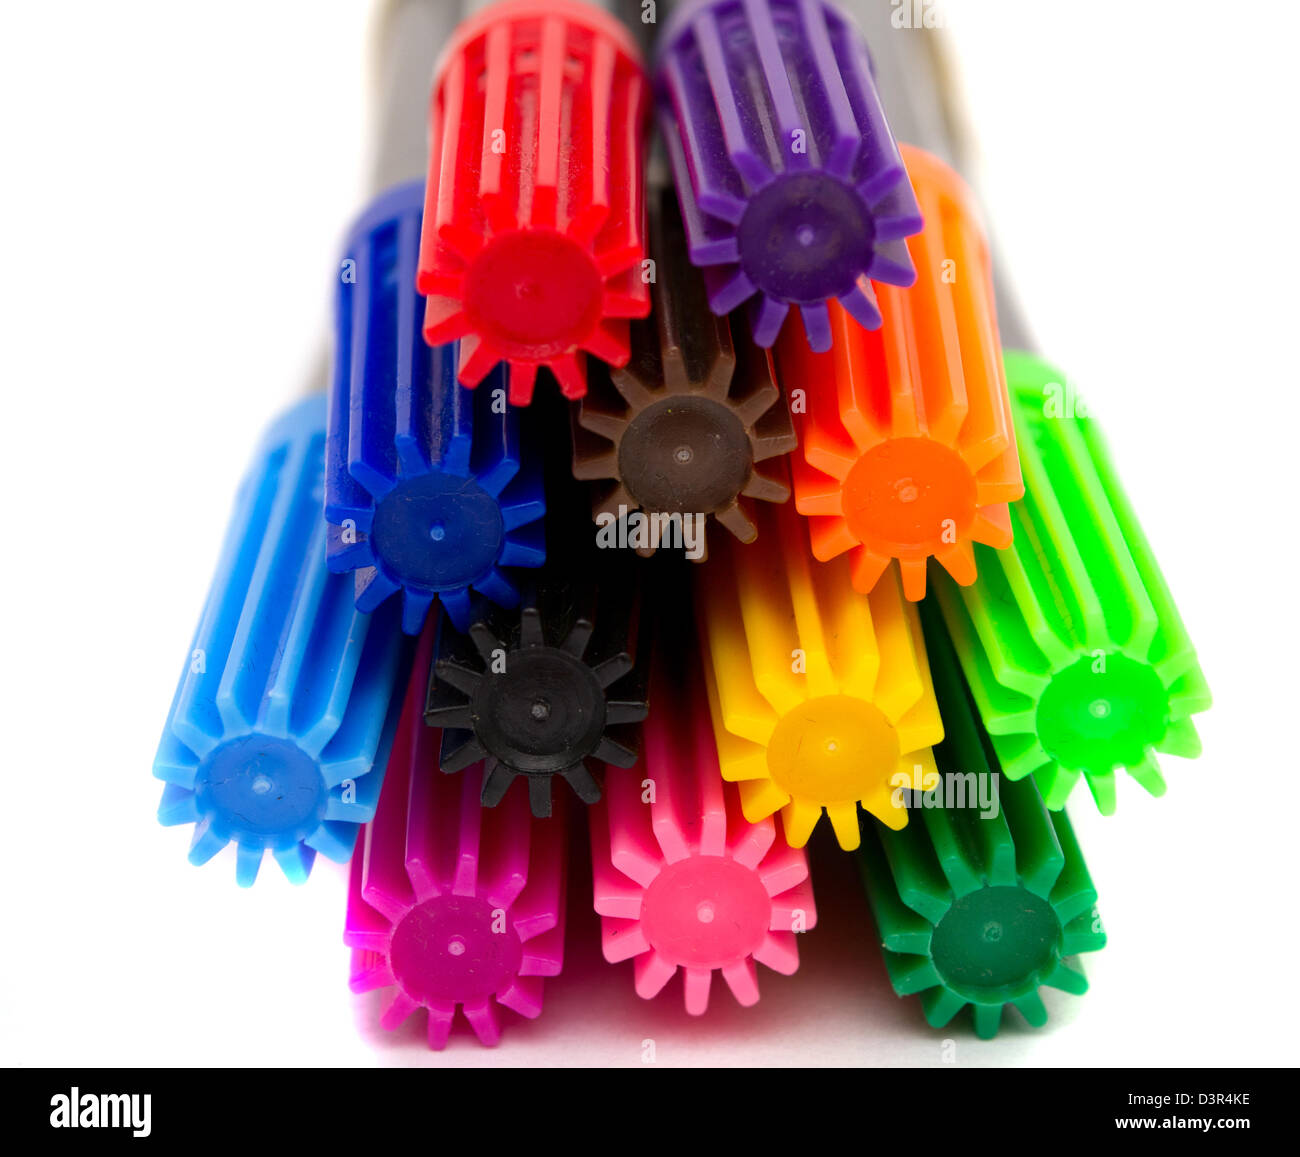 Multi-colored felt-tip pens Stock Photo